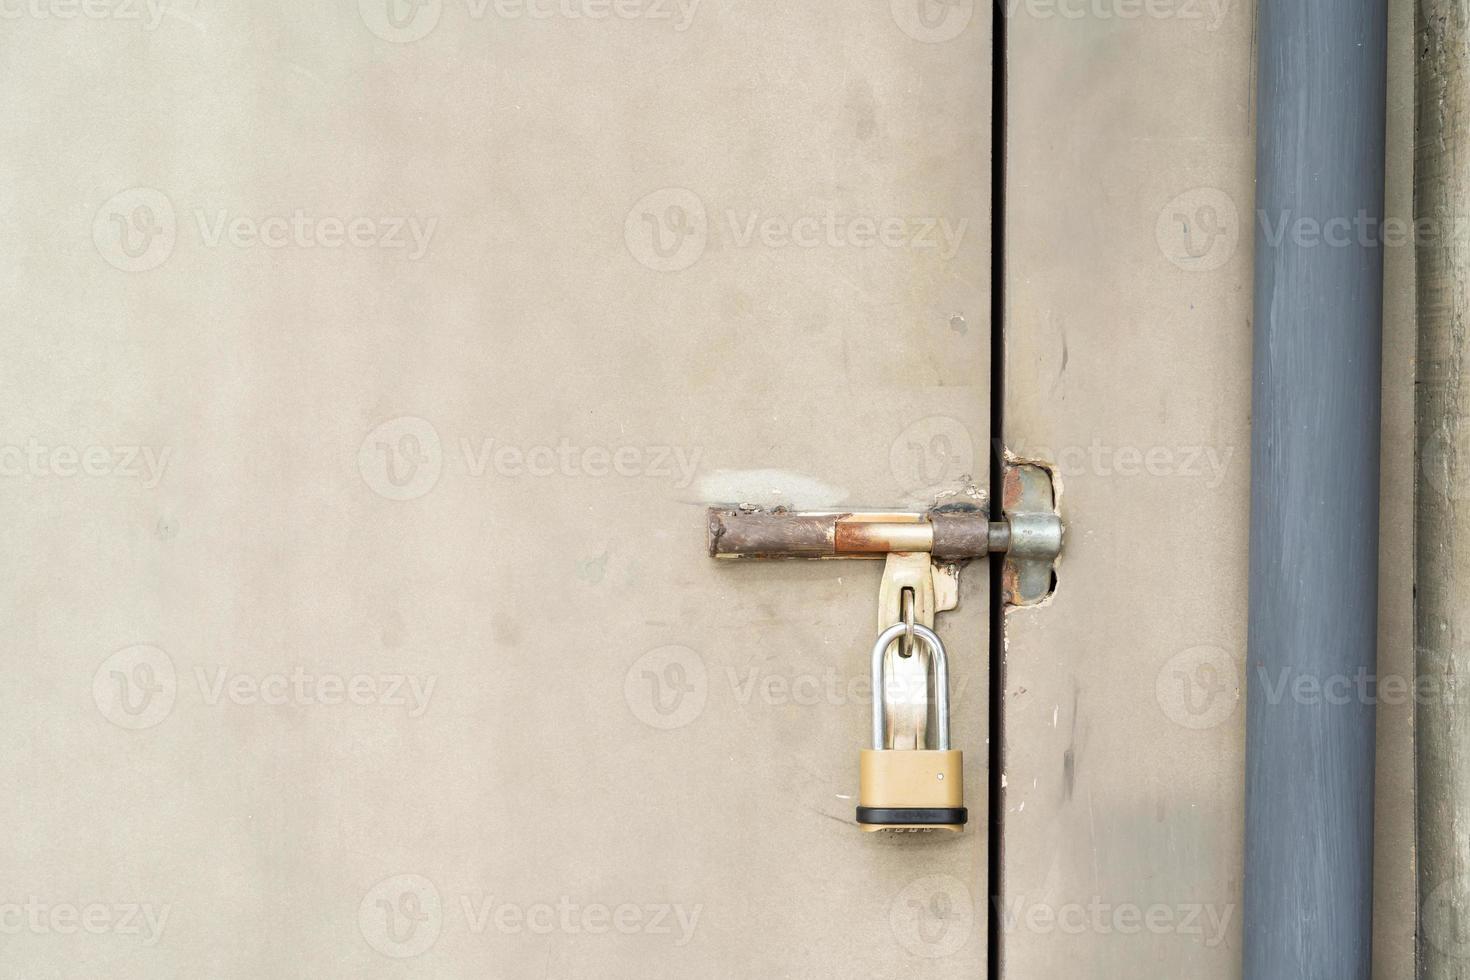 Gesloten deur met hangslot. metaal deur structuur achtergrond met ruimte foto